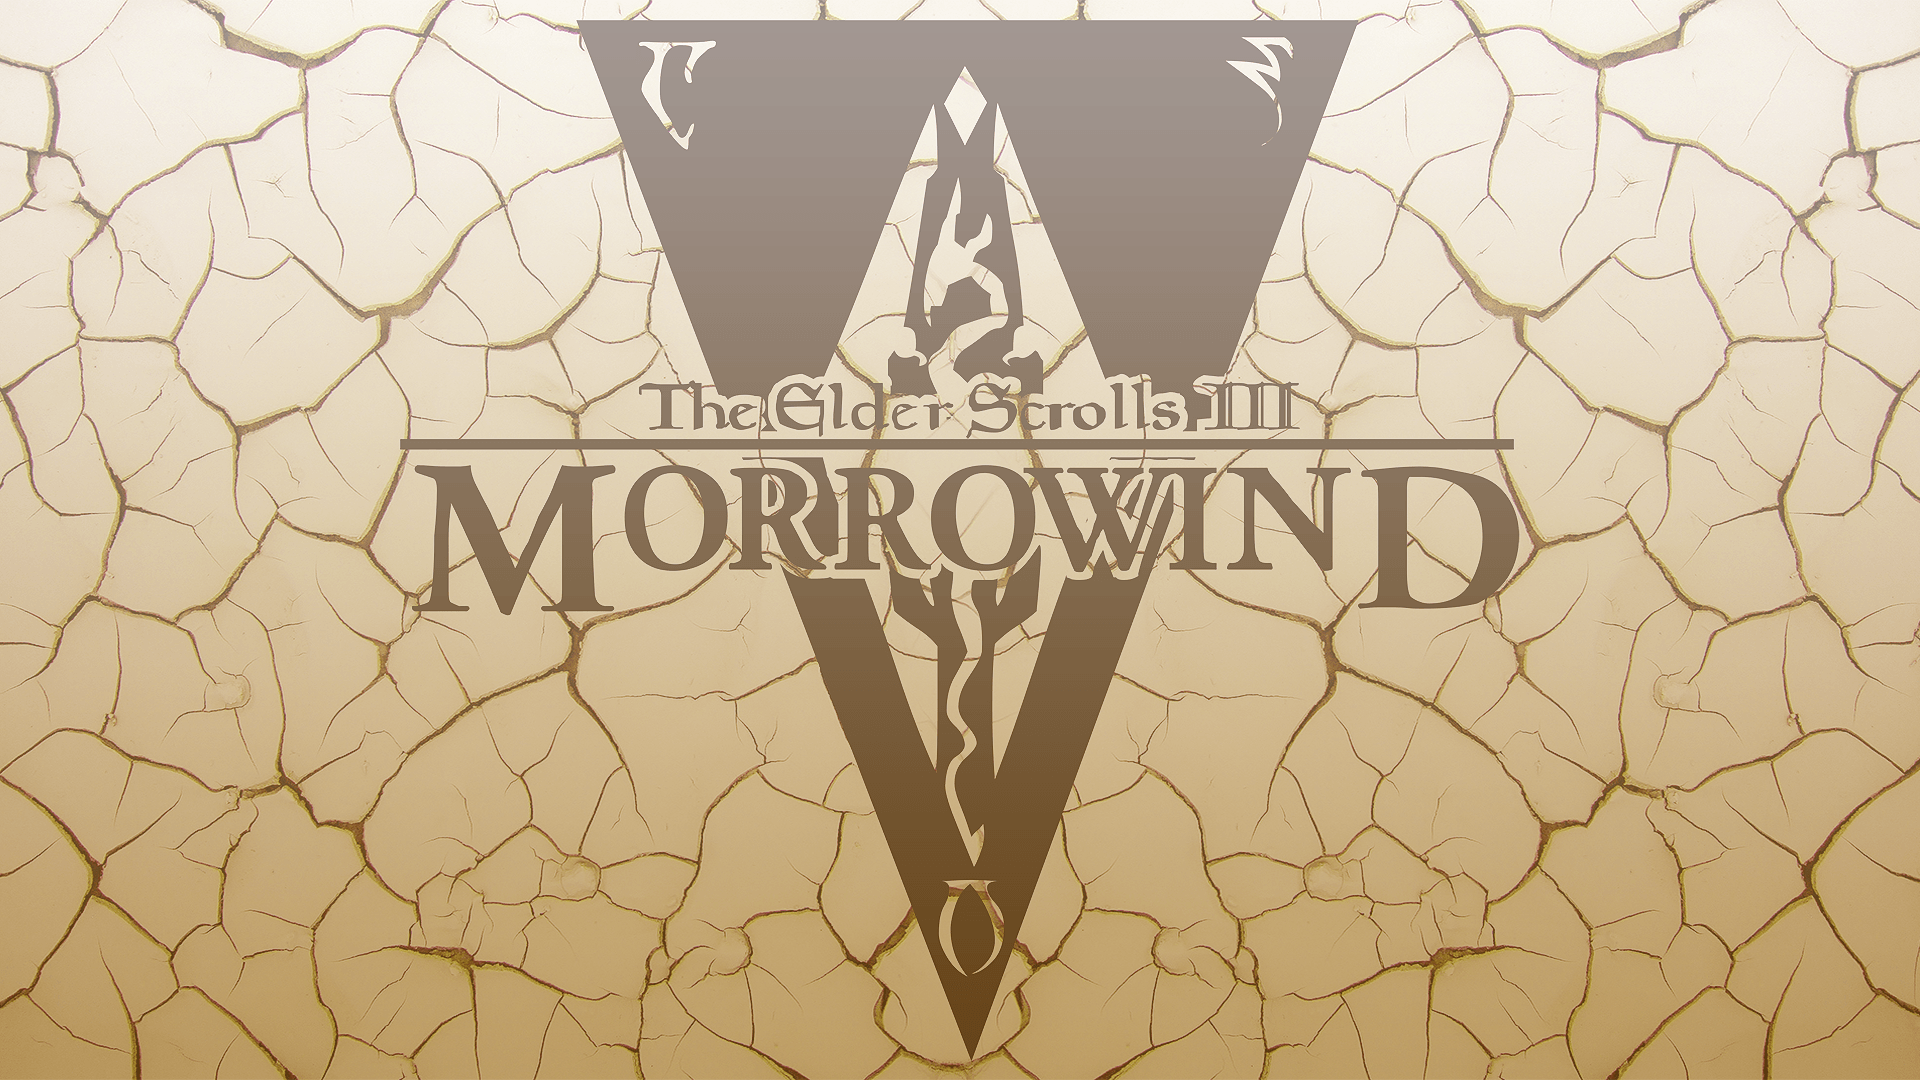 Made a Morrowind background (1920x1080)